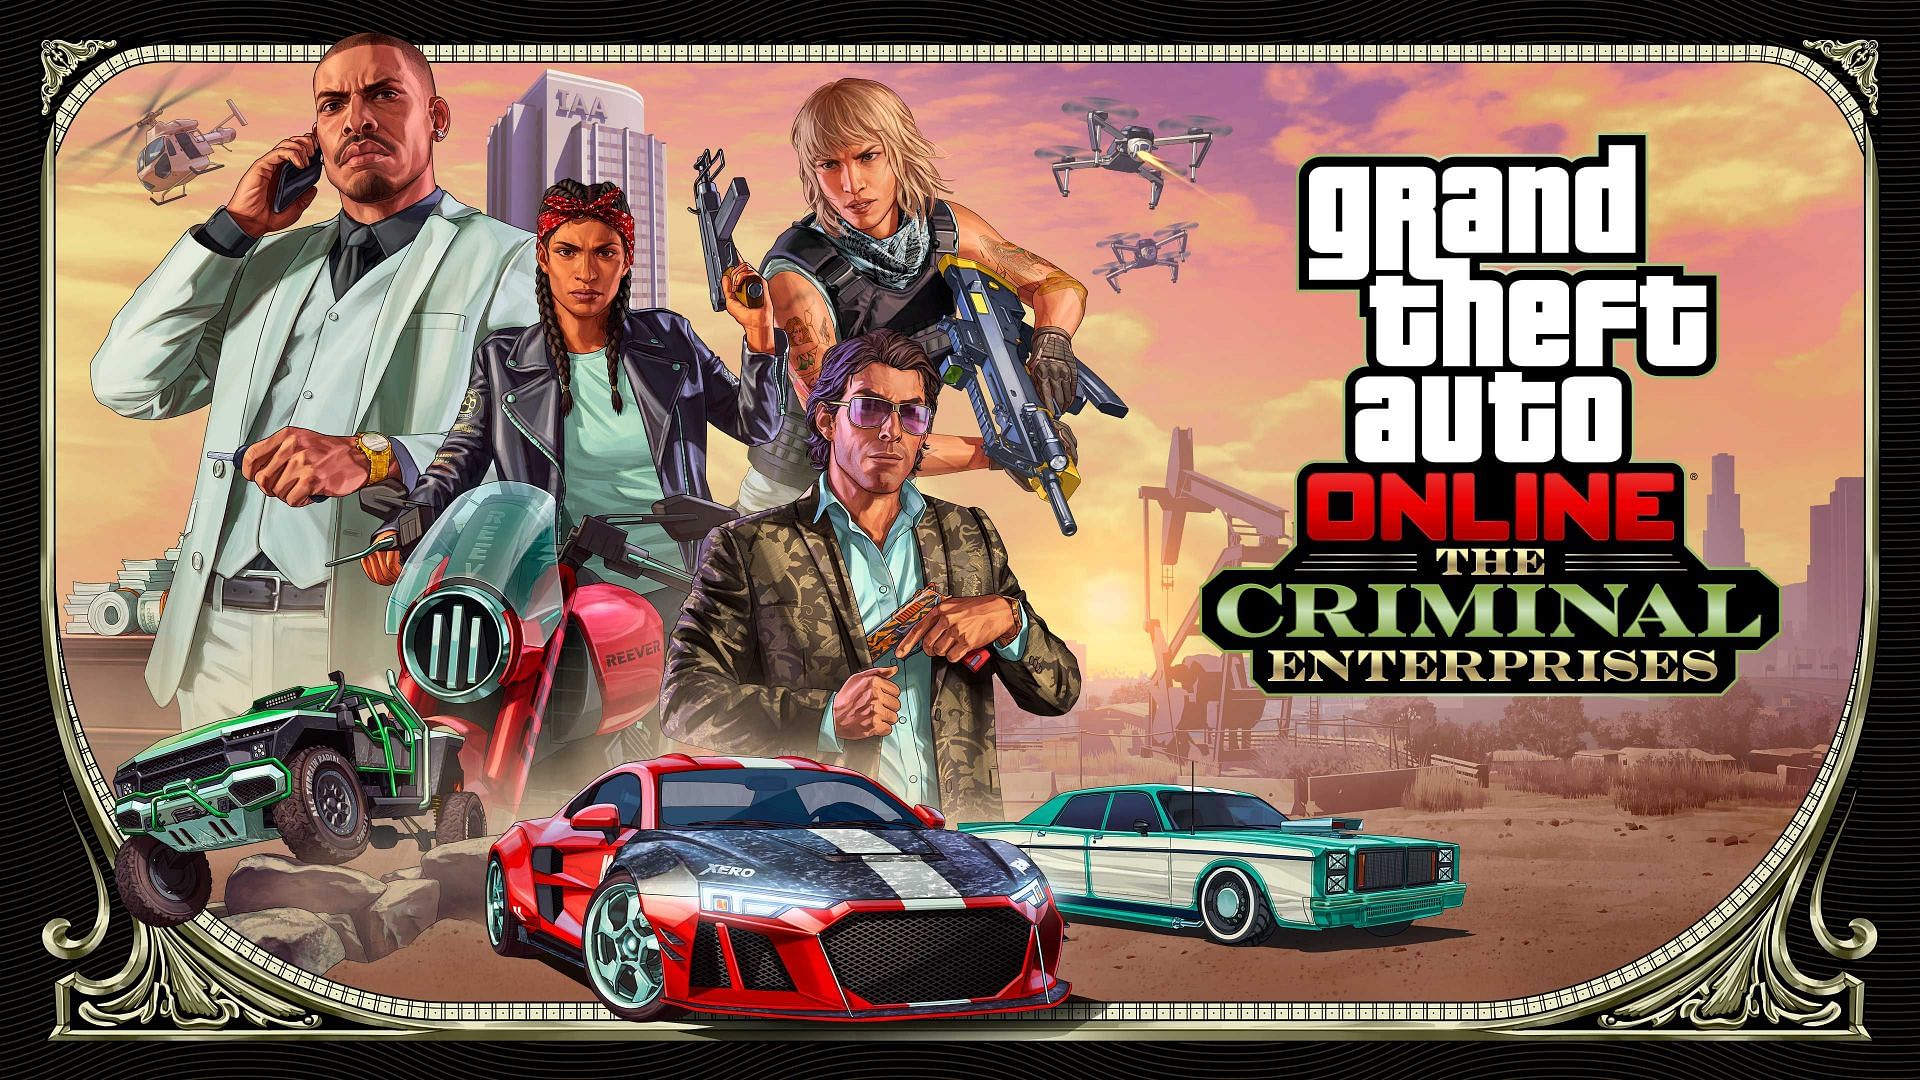 The Criminal Enterprises was the most recent update in GTA Online (Image via Rockstar Games)